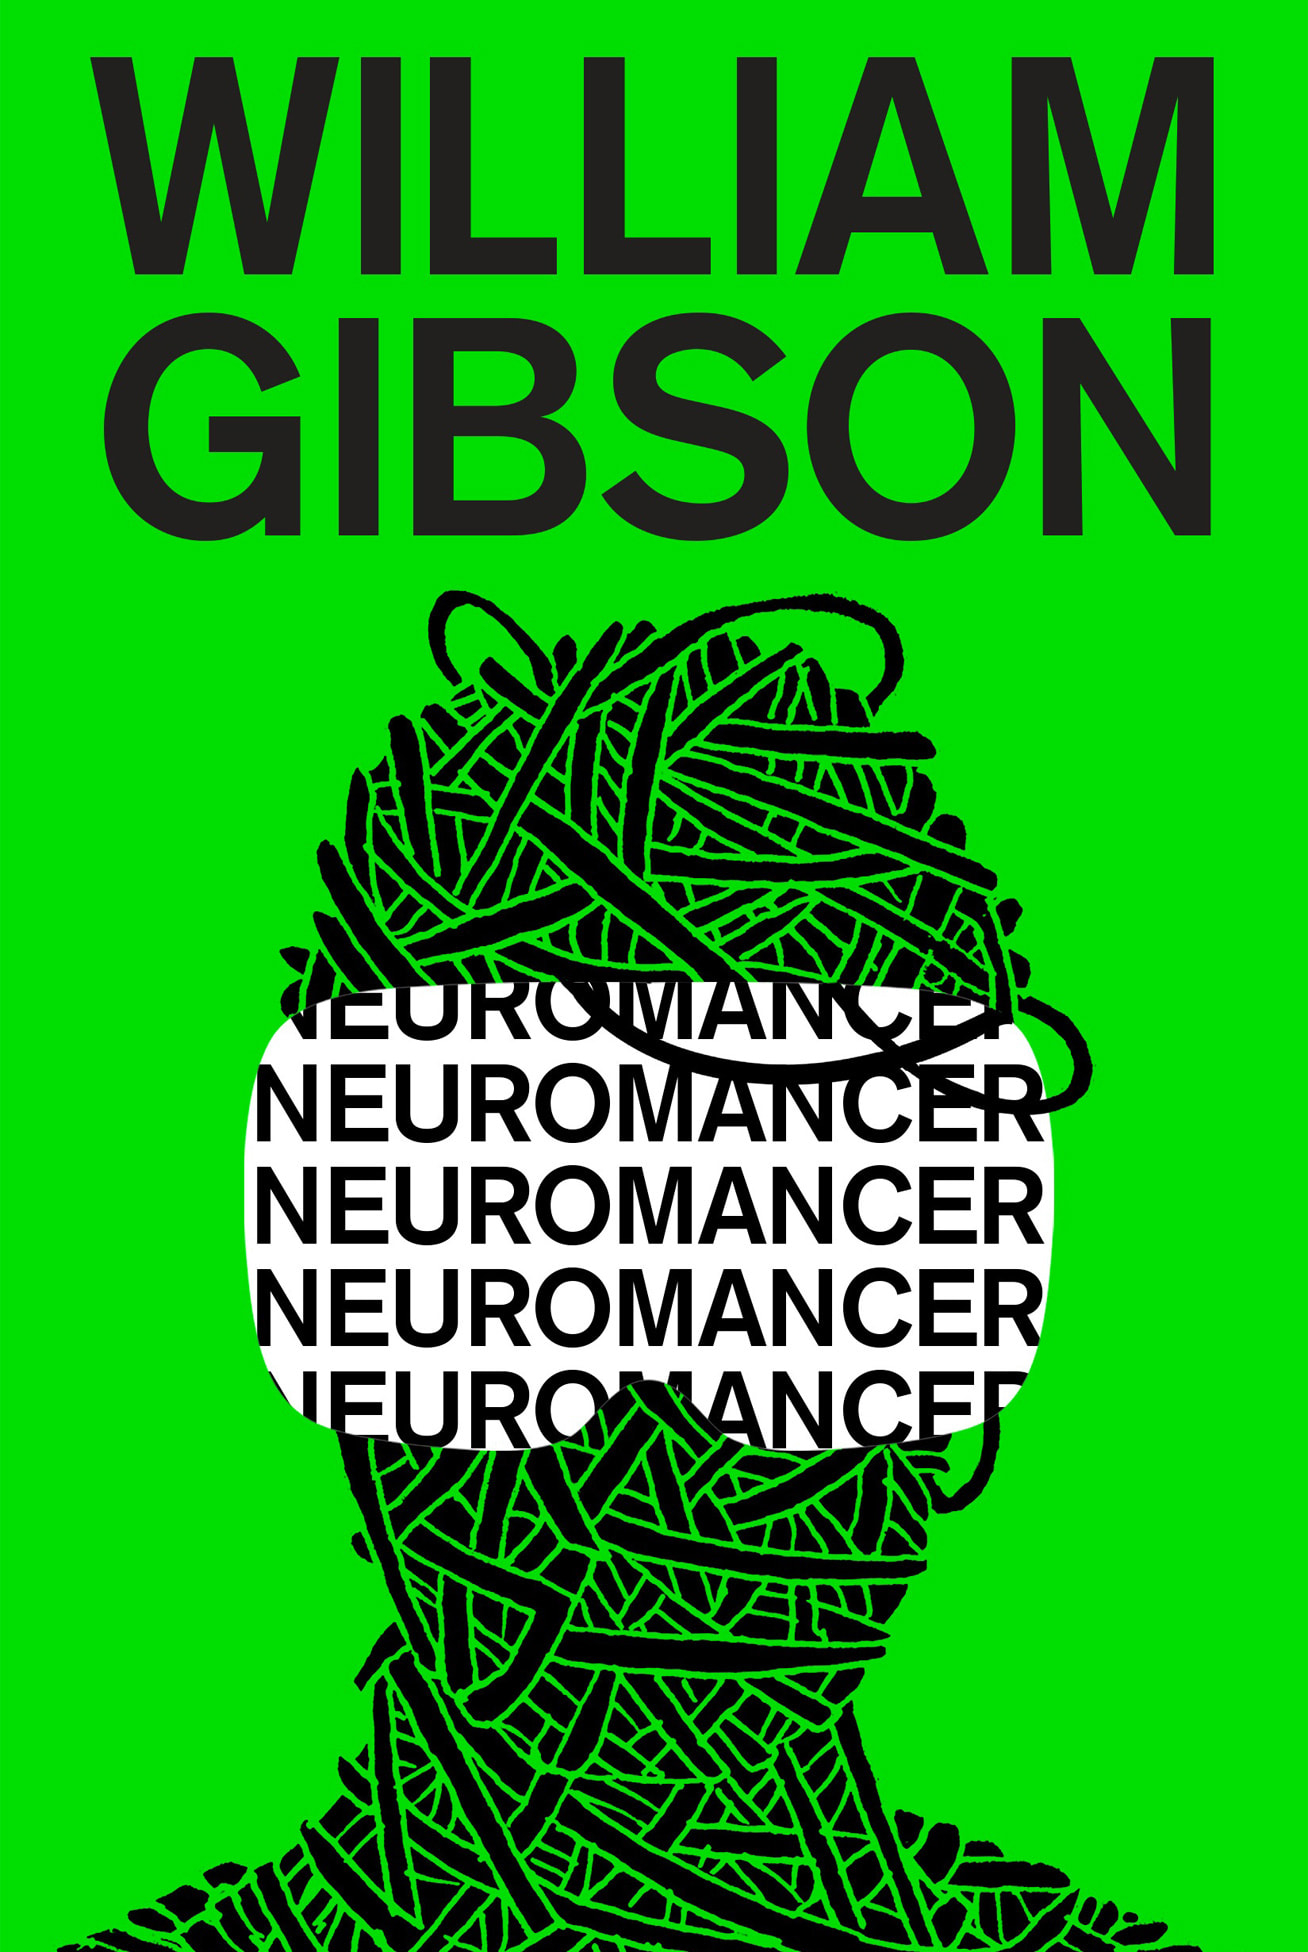 Apple announces “Neuromancer” new drama based on multi-award-winning sci-fi novel by William Gibson